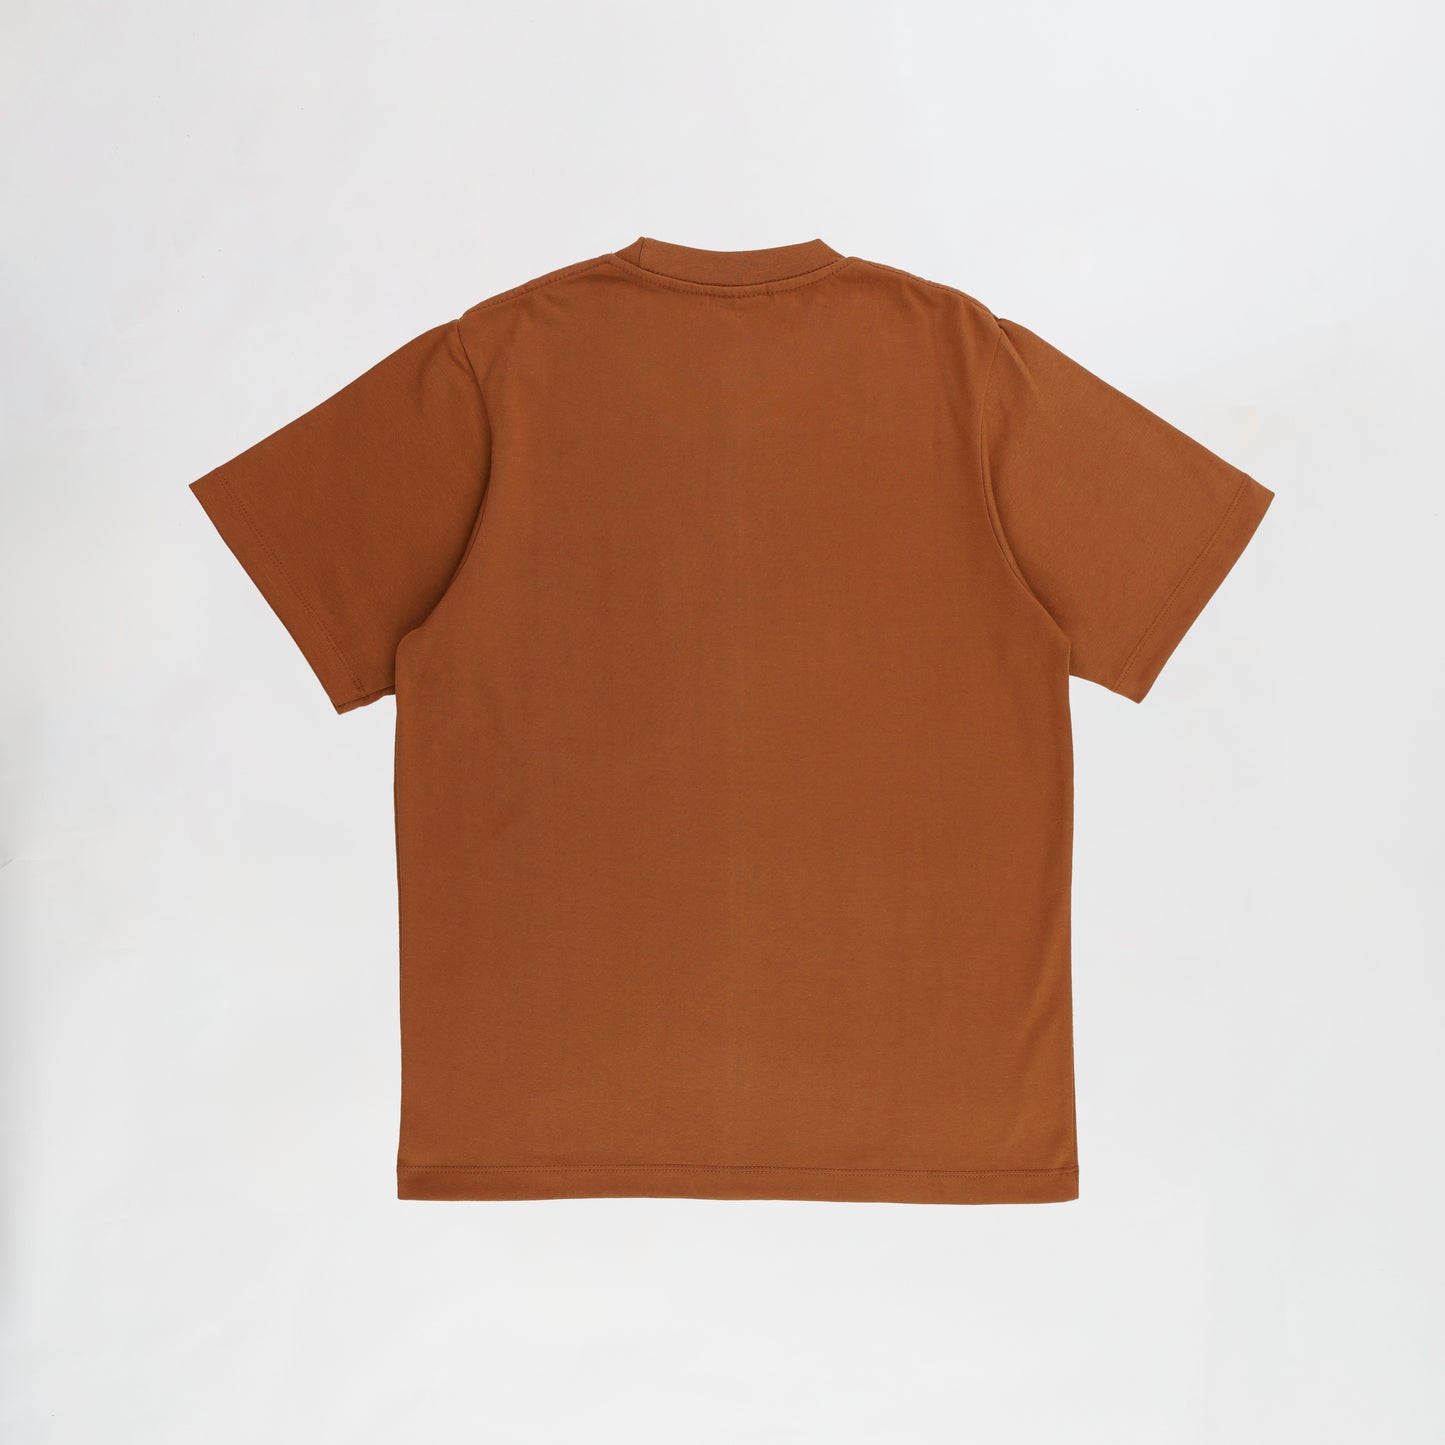 S/S Oak T-Shirt v2